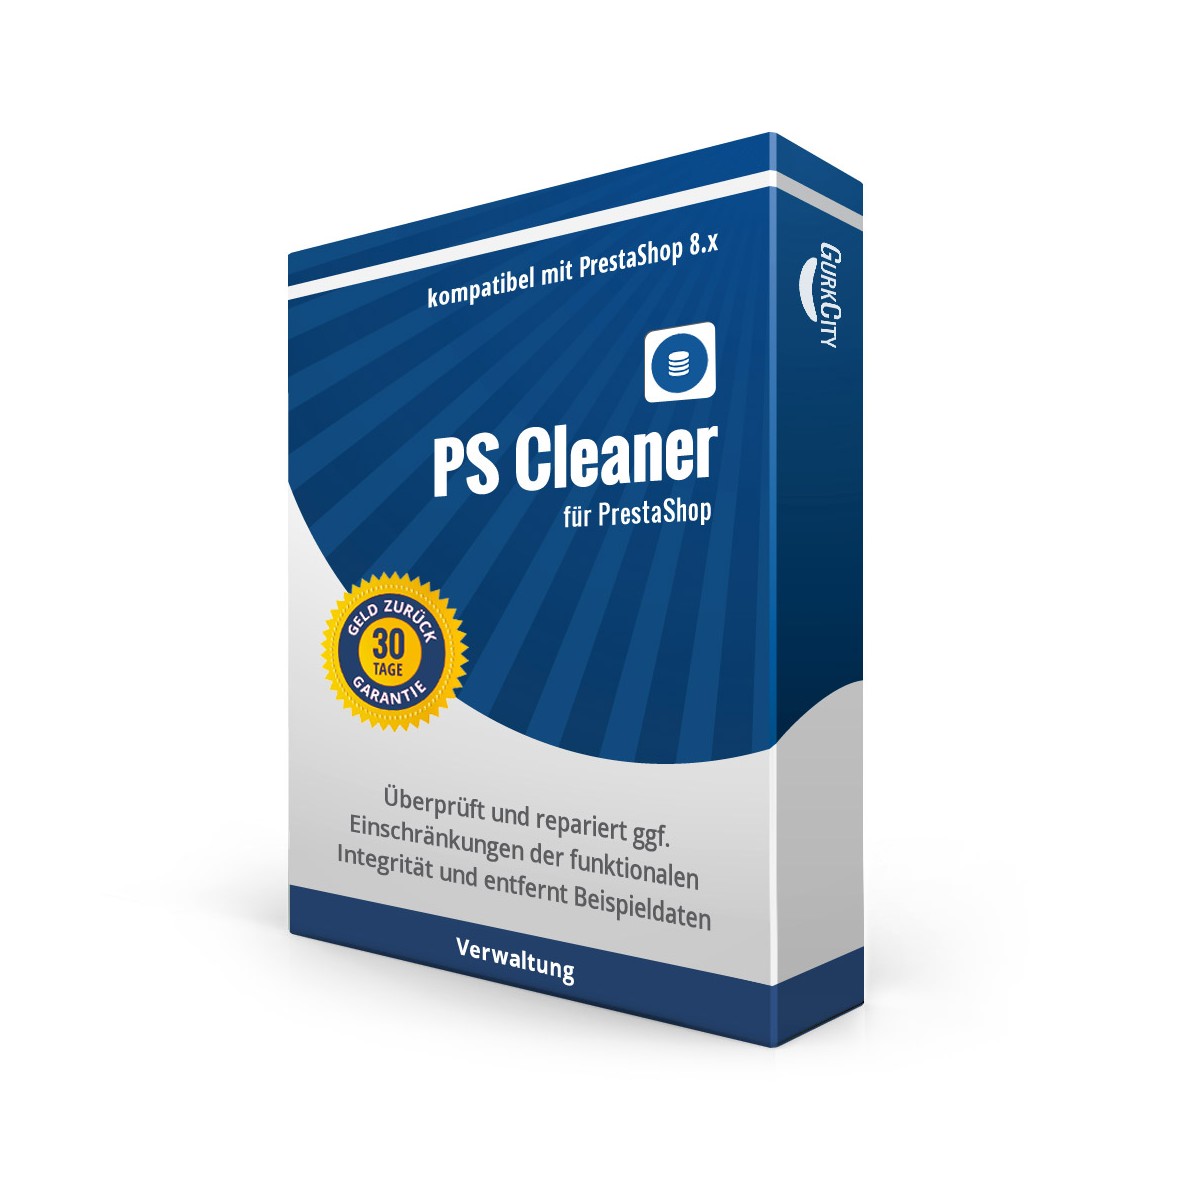 PS Cleaner Pro Prestashop 8.x